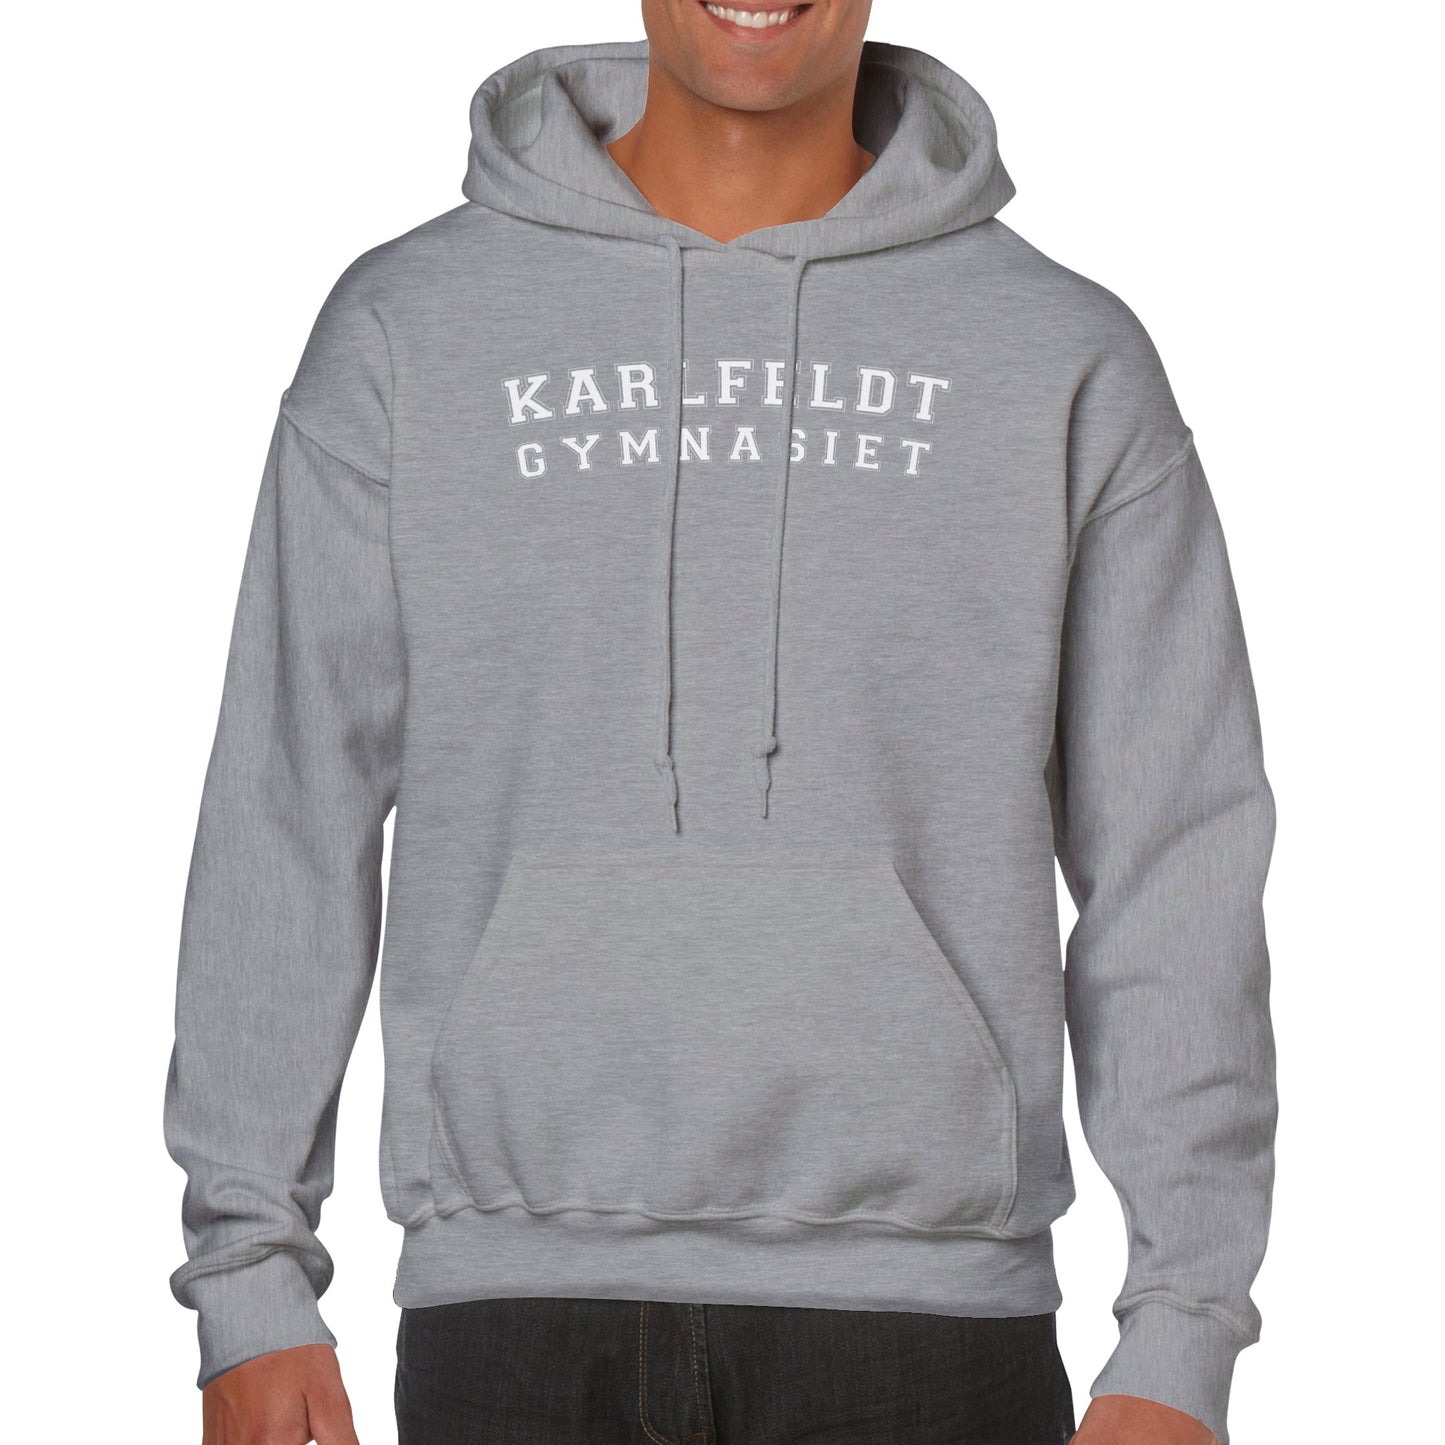 KARLFELDTGYMNASIET - Unisex hoodie - 5 färger